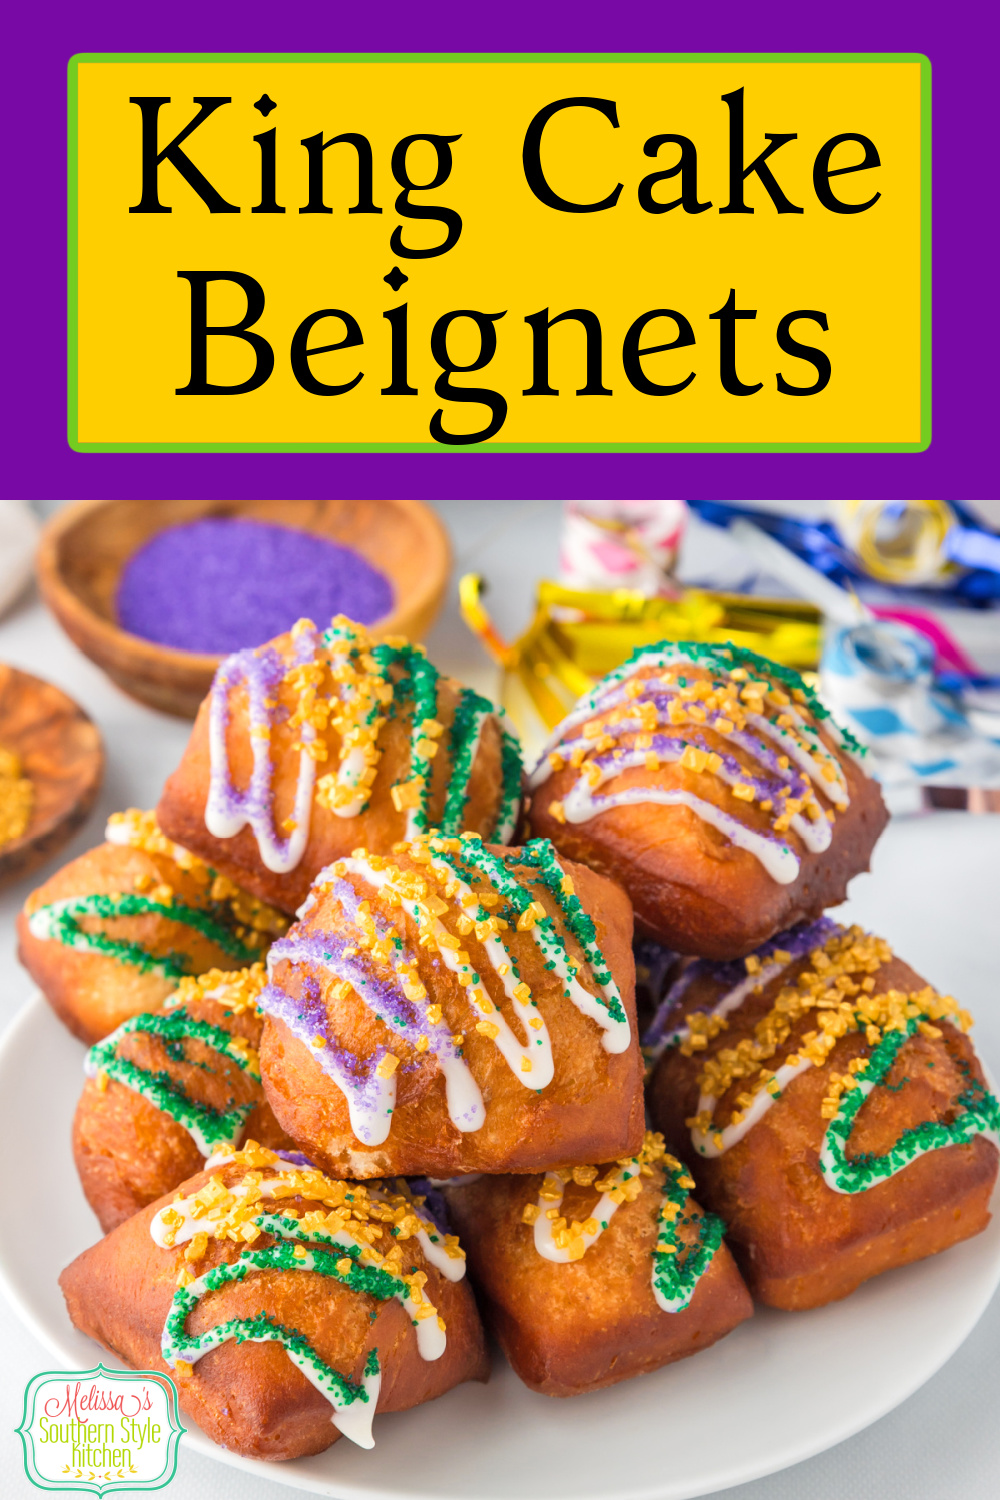 Kick off Mardi Gras with King Cake Beignets! #beignets #kingcake #mardigras #mardigrasrecipes #NOLA #desserts #doughnutrecipes #kingcakebeignets via @melissasssk